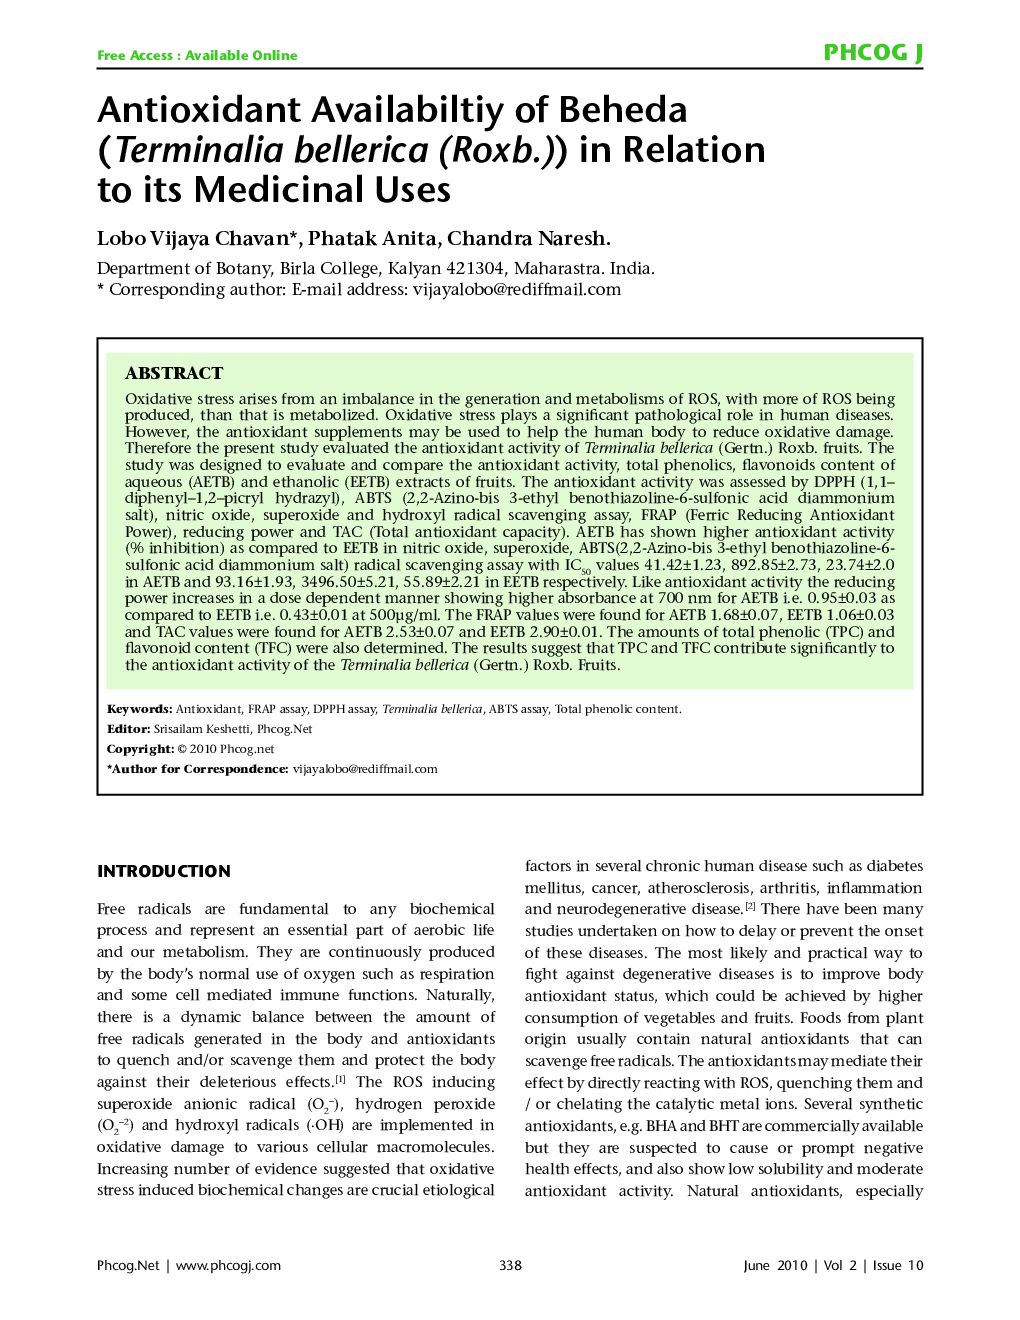 Antioxidant Availabiltiy of Beheda (Terminalia bellerica (Roxb.)) in Relation to its Medicinal Uses